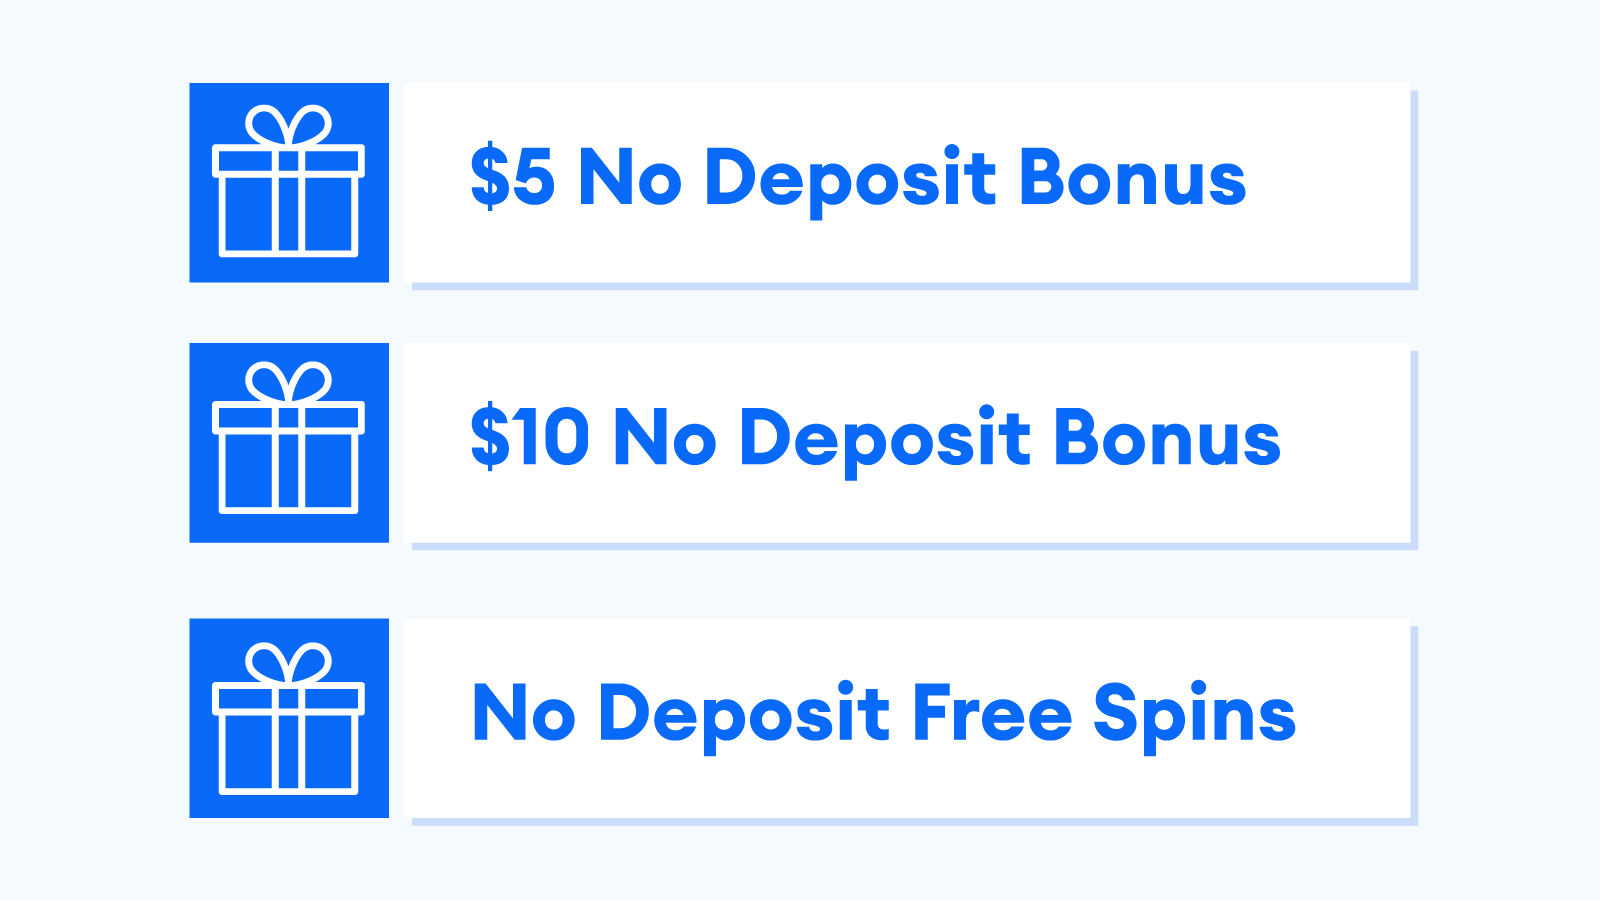 Alternative-No-Deposit-Bonuses -$5, $10, No Deposit Free Spins